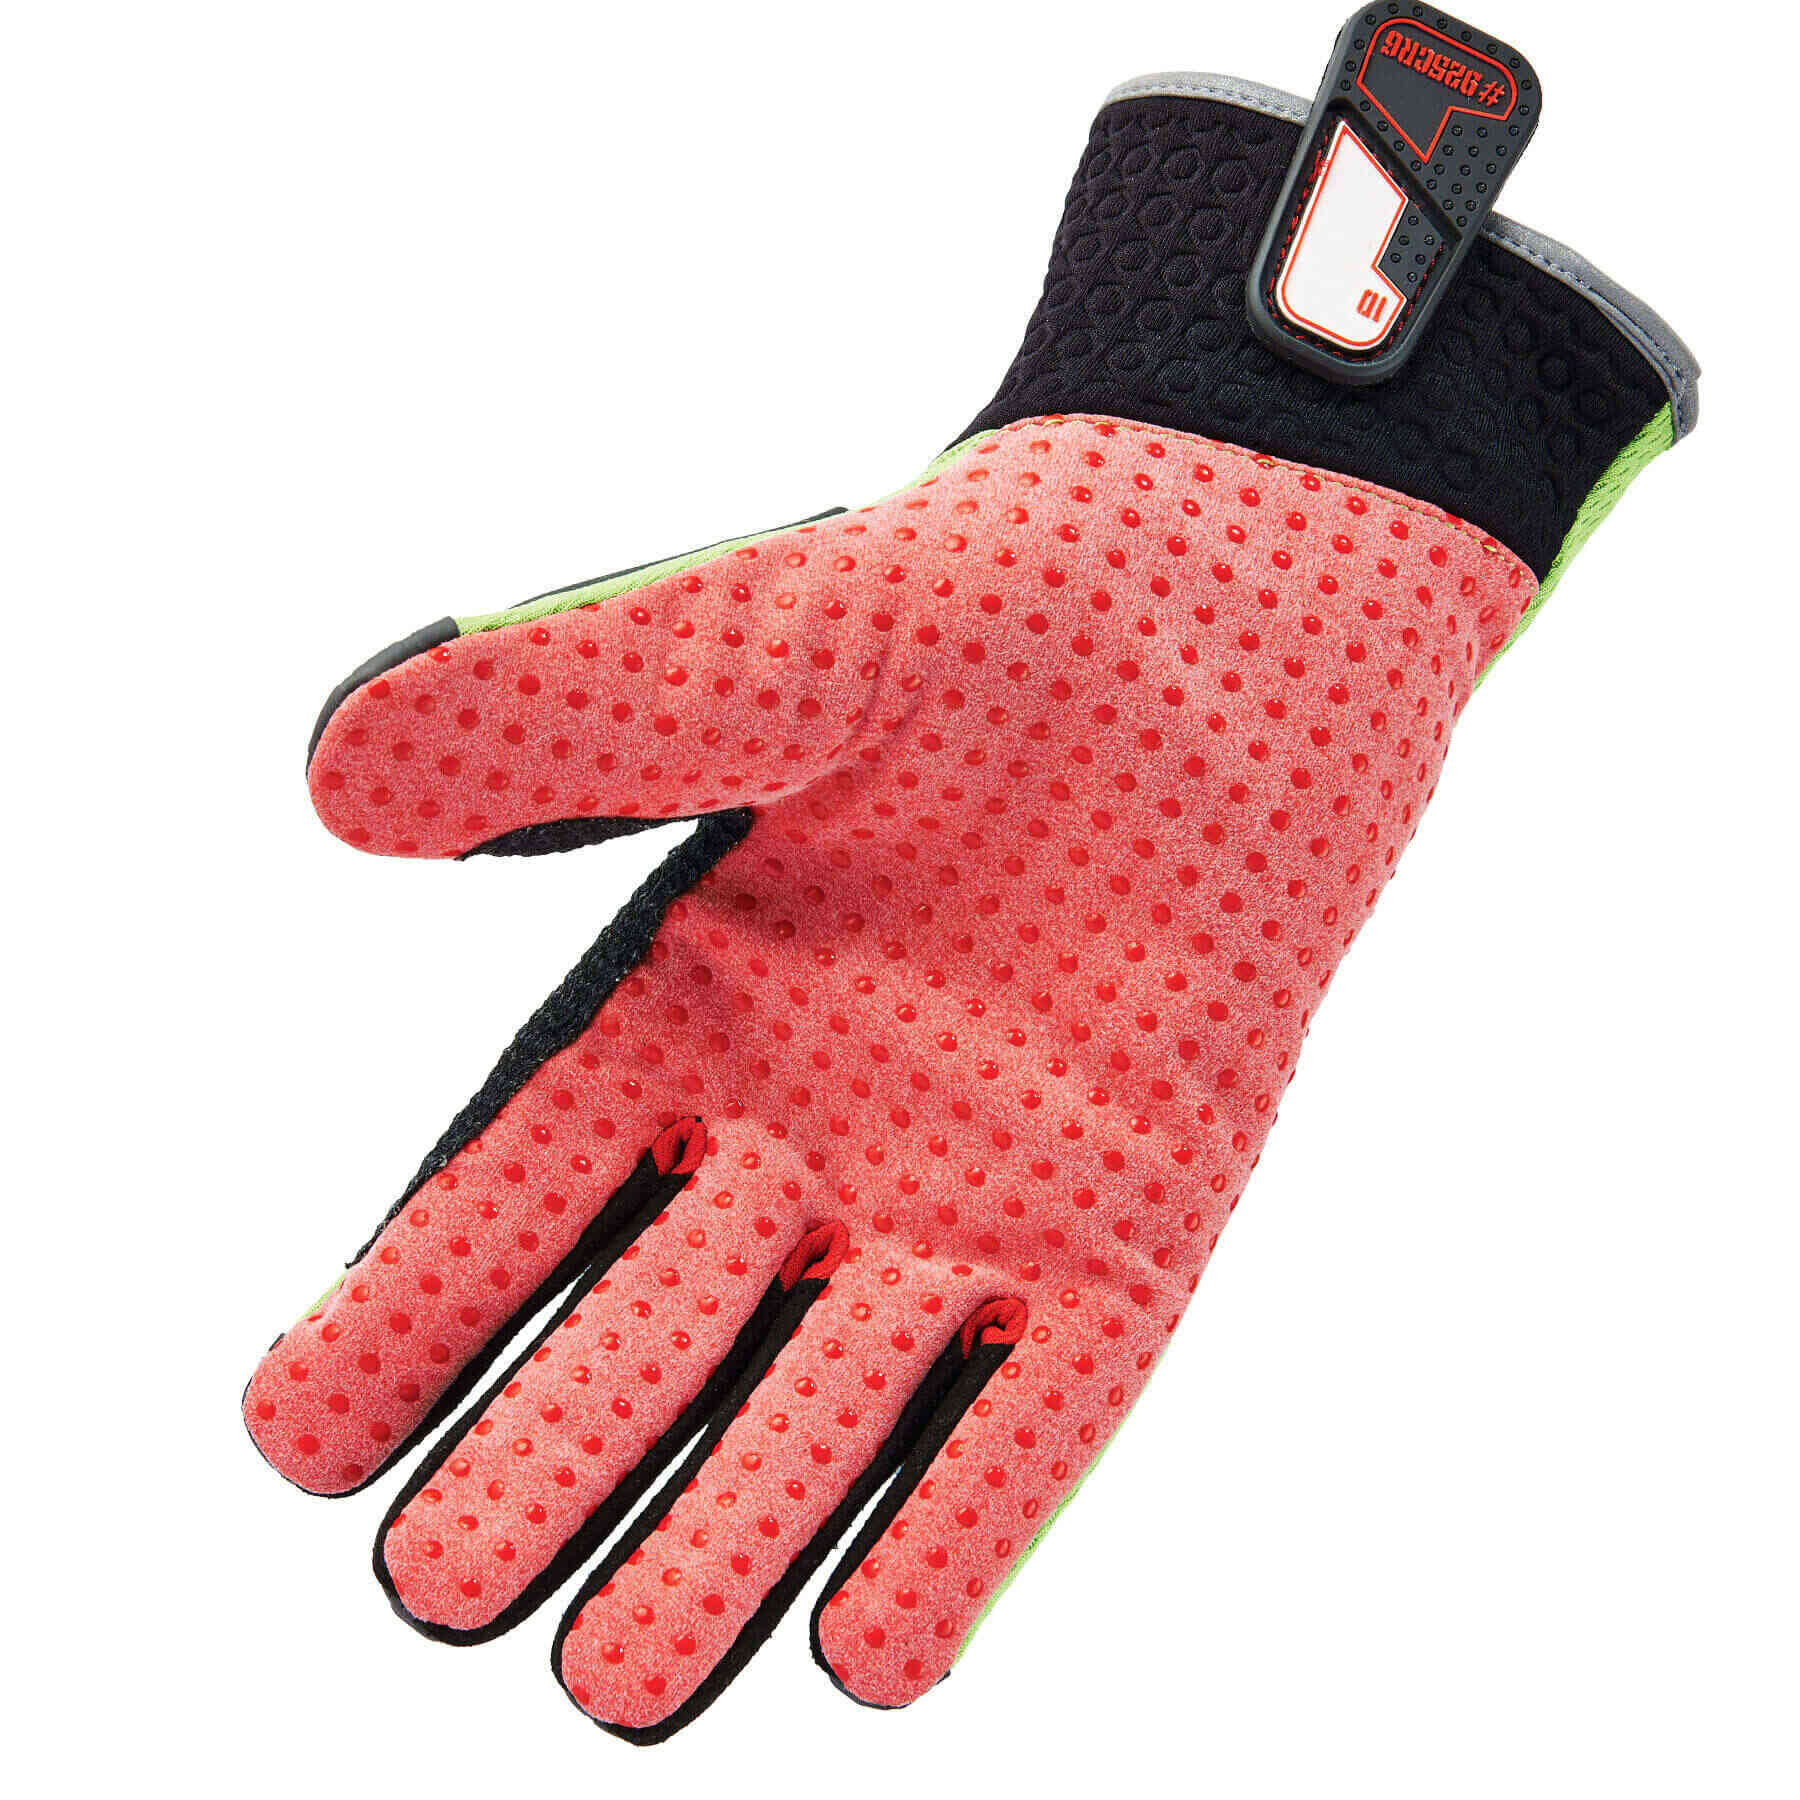 https://www.ergodyne.com/sites/default/files/product-images/17292-925cr6-performance-dir-gloves-cut-resistance-lime-palm.jpg